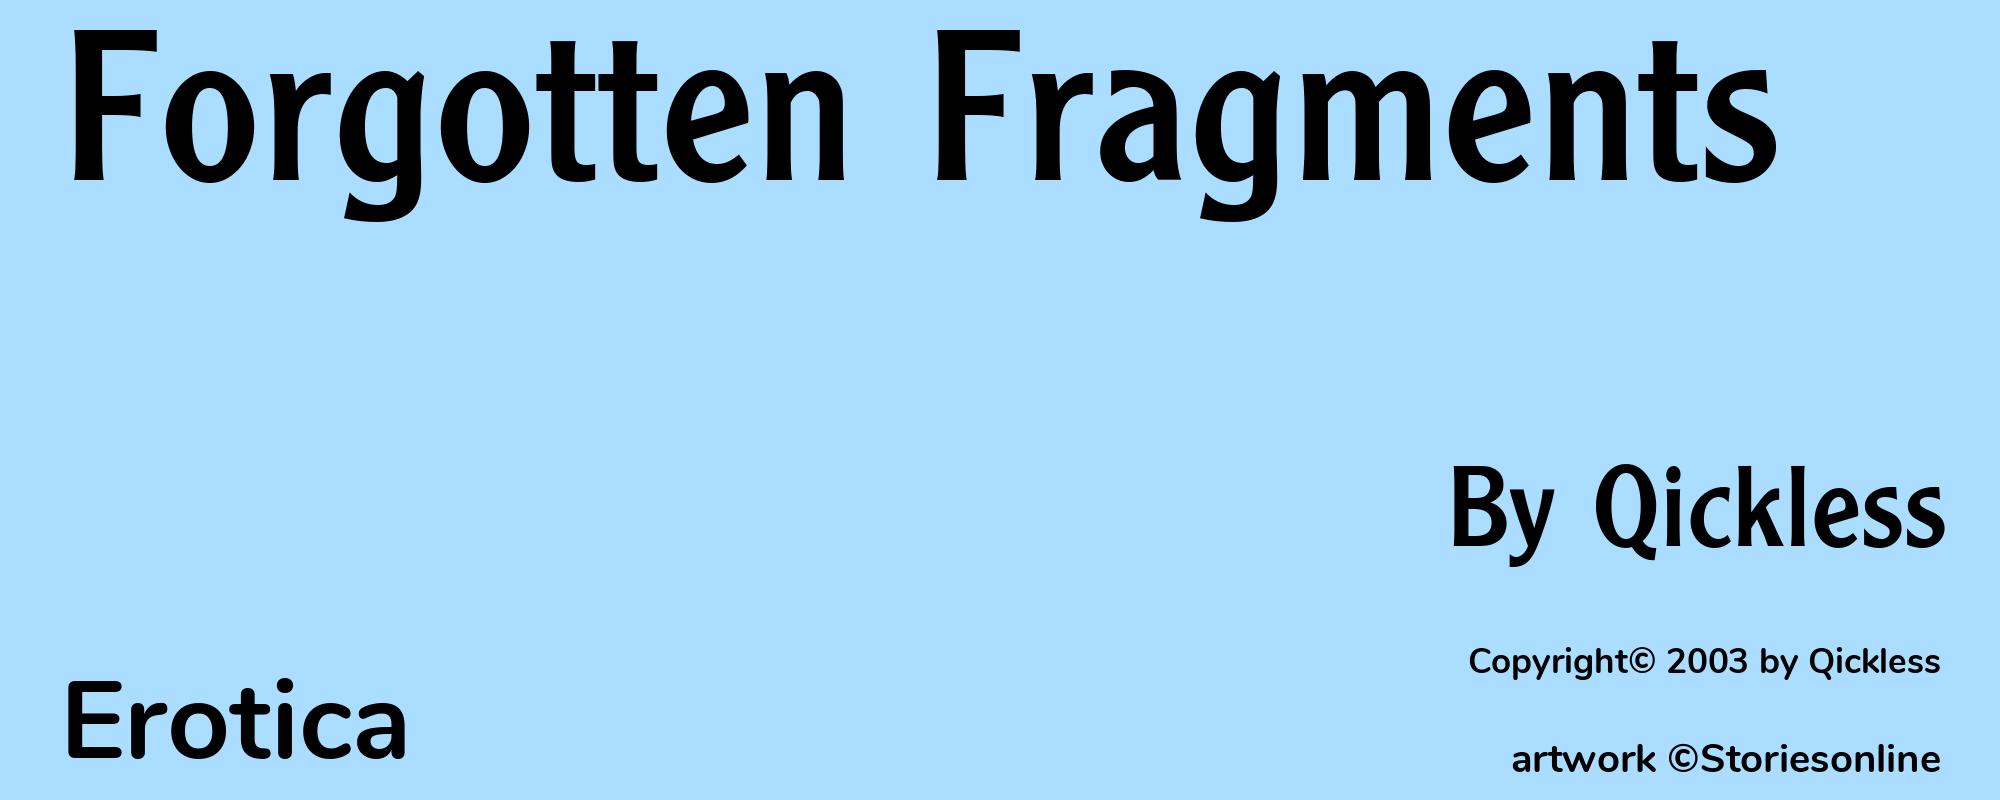 Forgotten Fragments - Cover